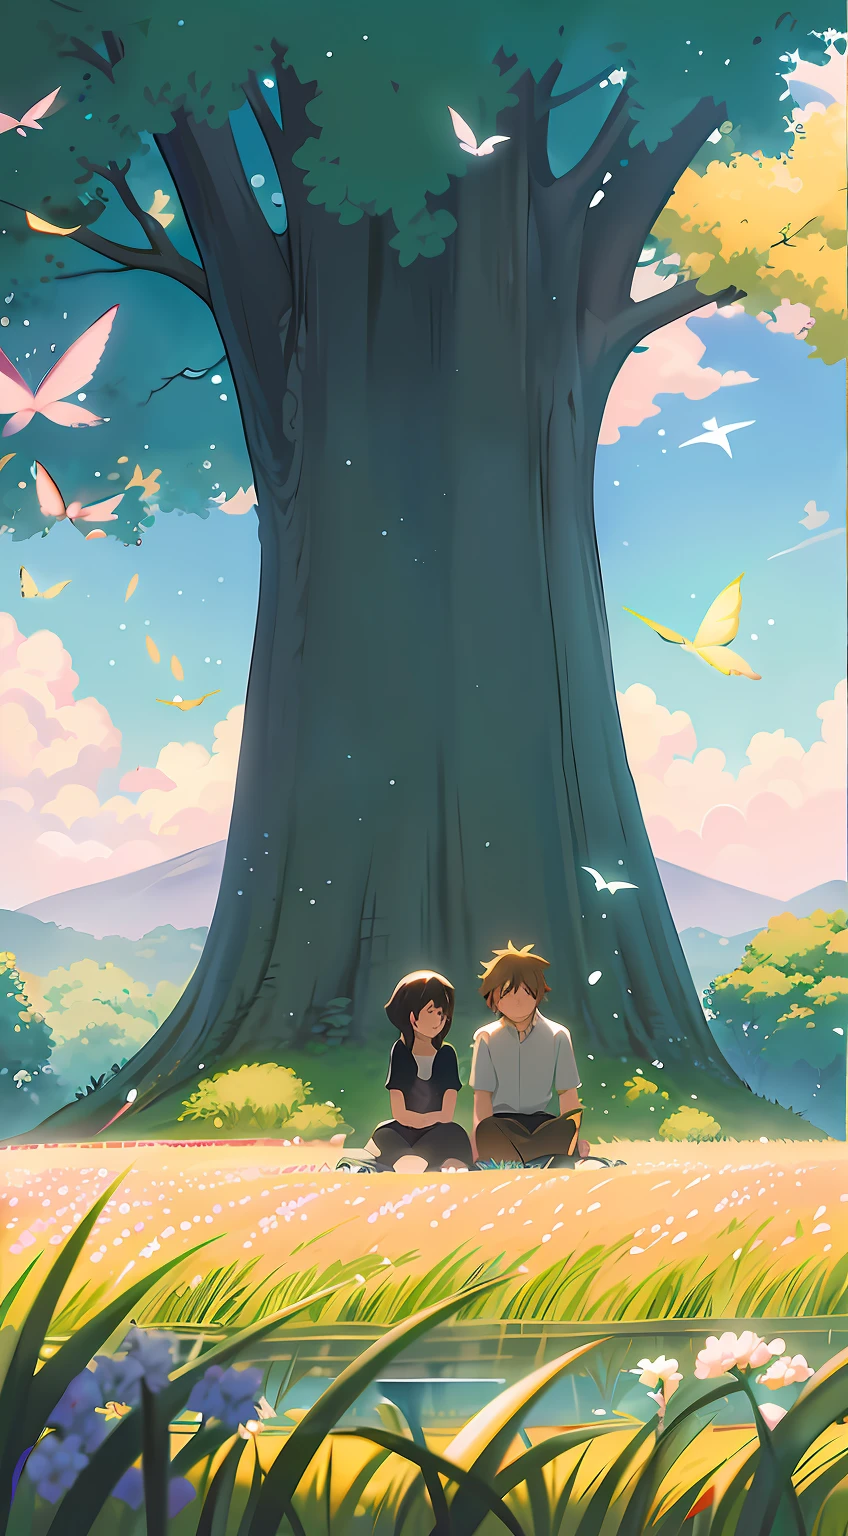 Anime tree tutorial =) by liamsi4 on DeviantArt